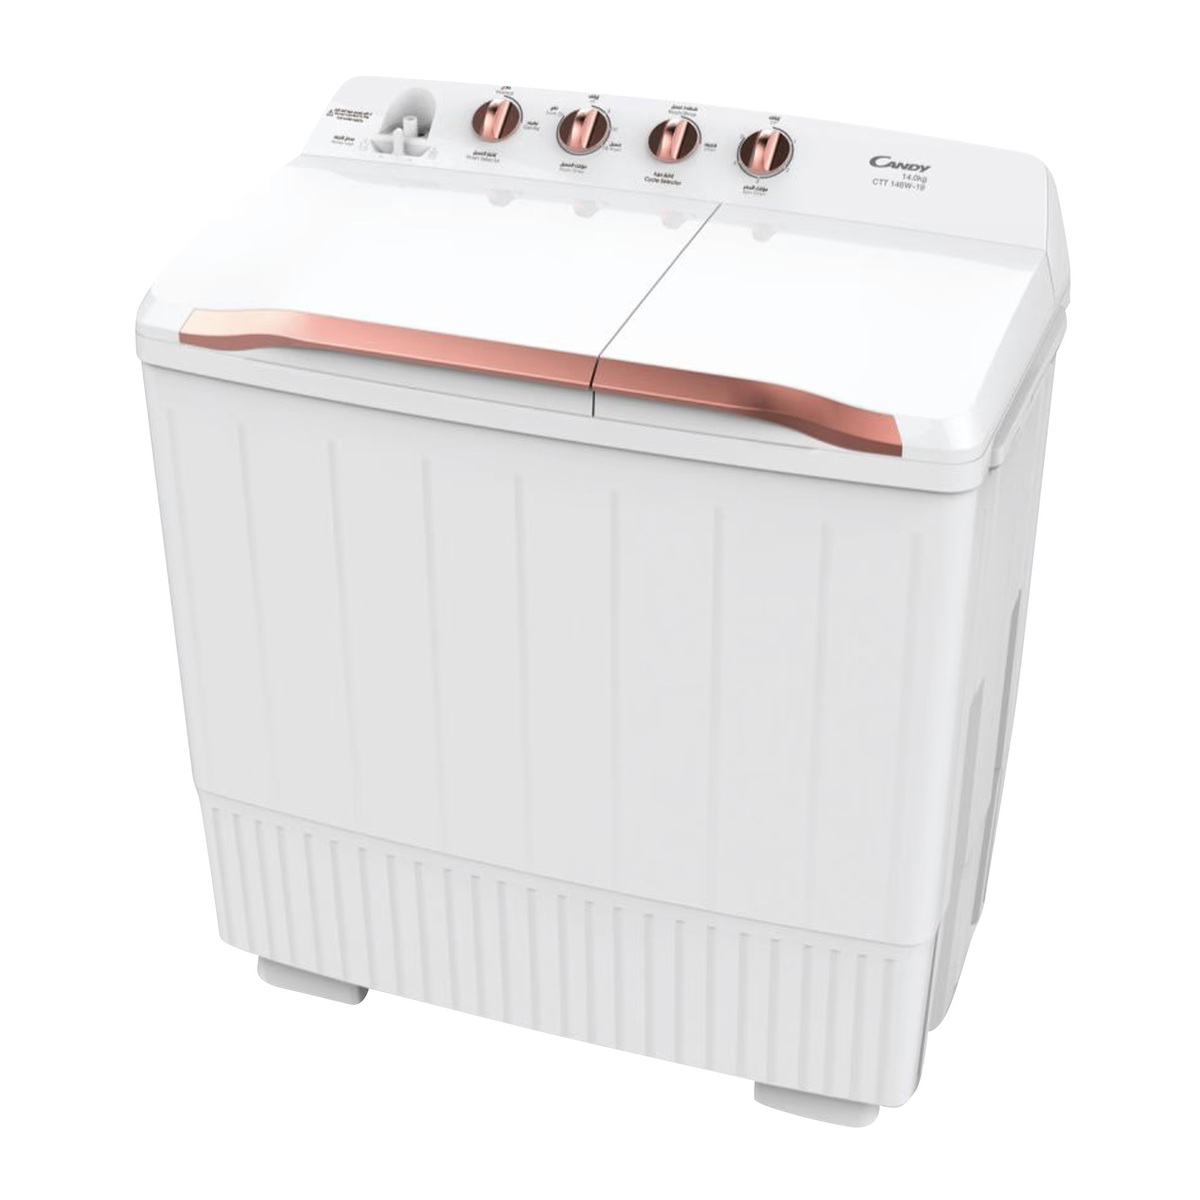 Candy Twin Tub Semi Automatic Washing Machine, 14/7.5 kg, 1350 RPM, White, CTT 148W-19